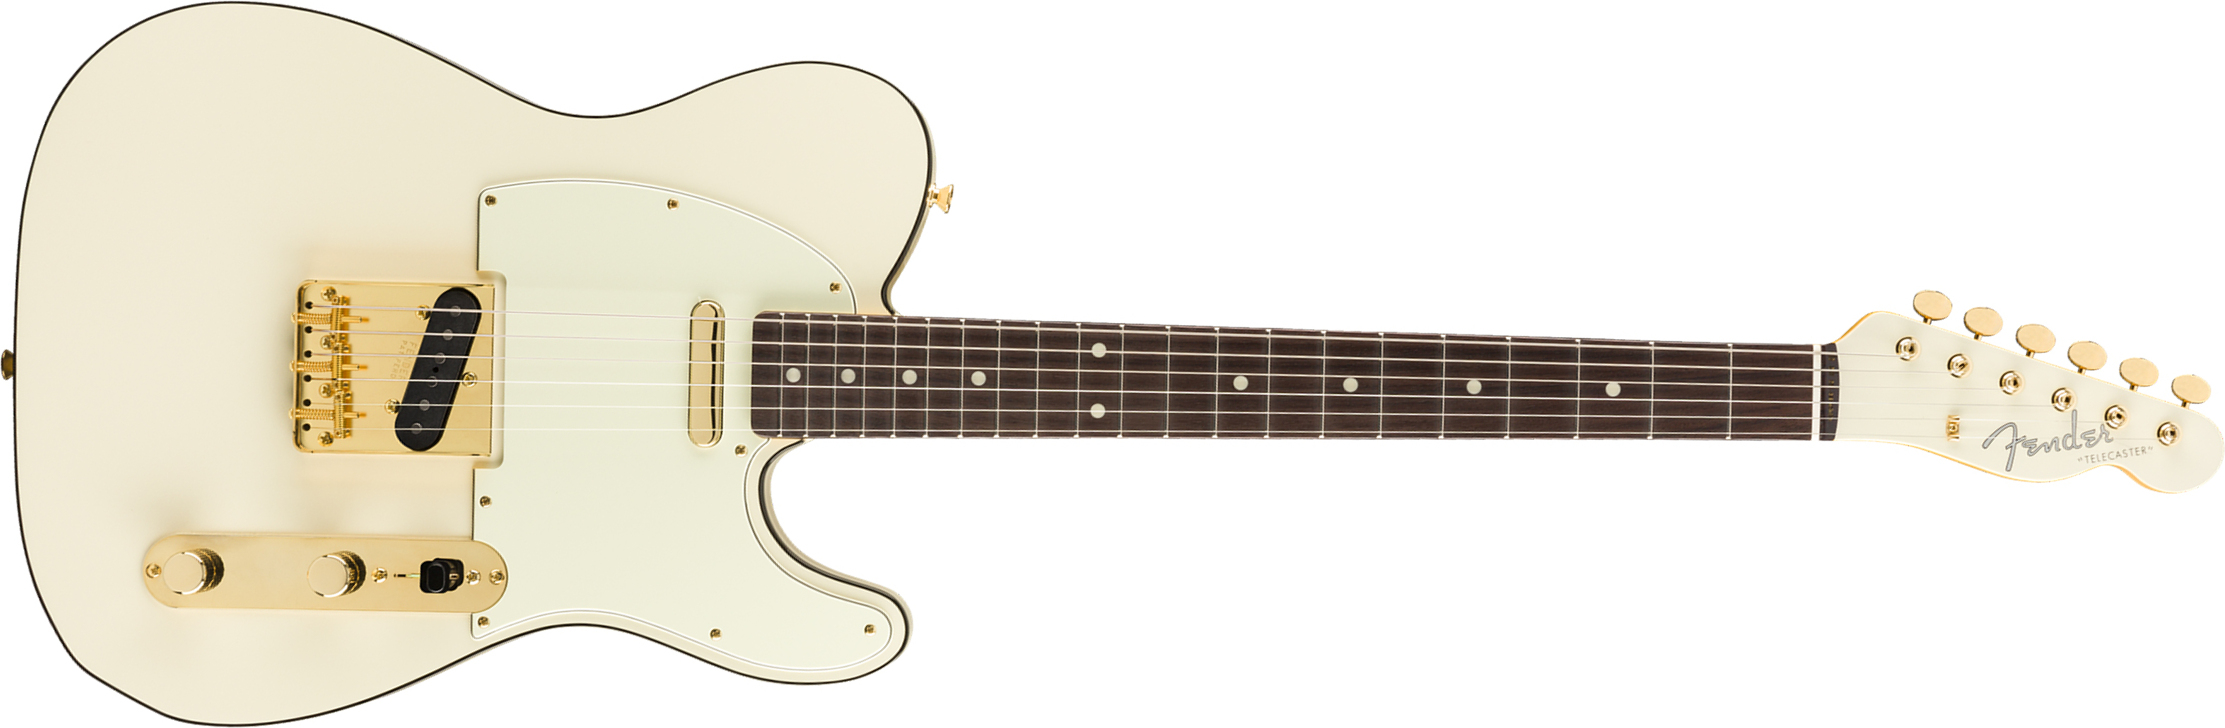 Fender Tele Daybreak Ltd 2019 Japon Gh Rw - Olympic White - Televorm elektrische gitaar - Main picture